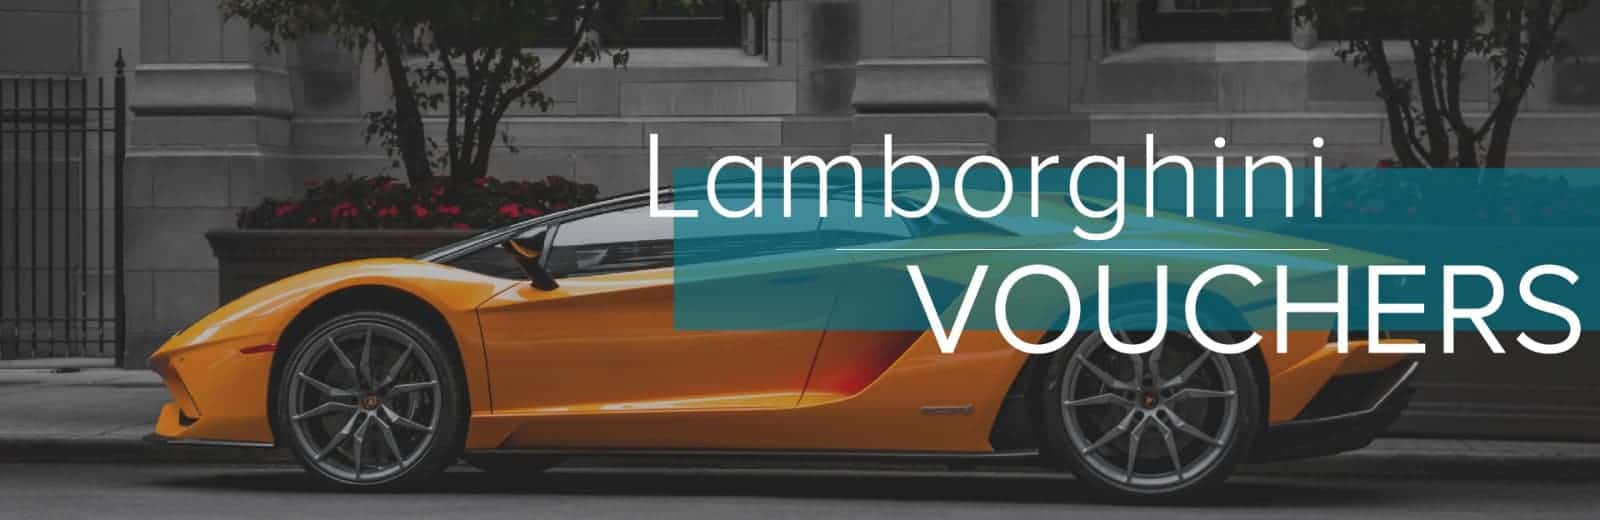 Lamborghini Vouchers